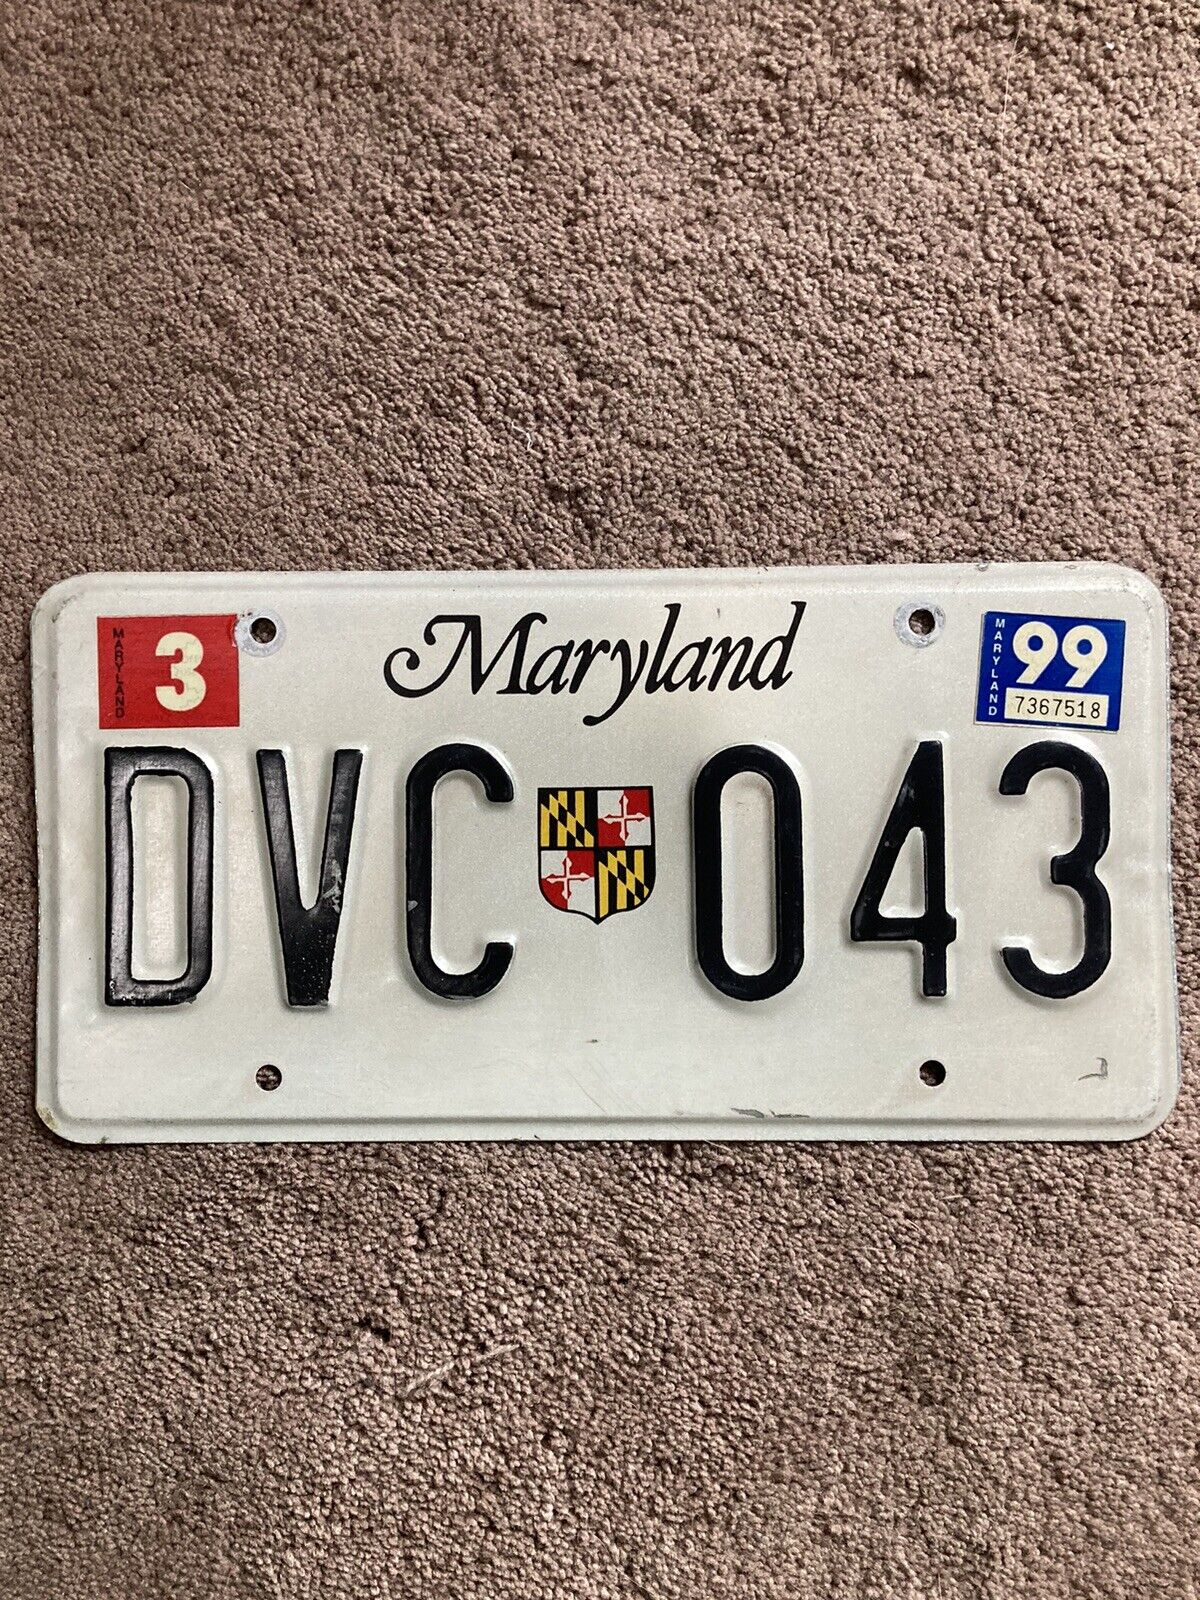 1999 Maryland  “Shield” License Plate - DVC 043 - Nice